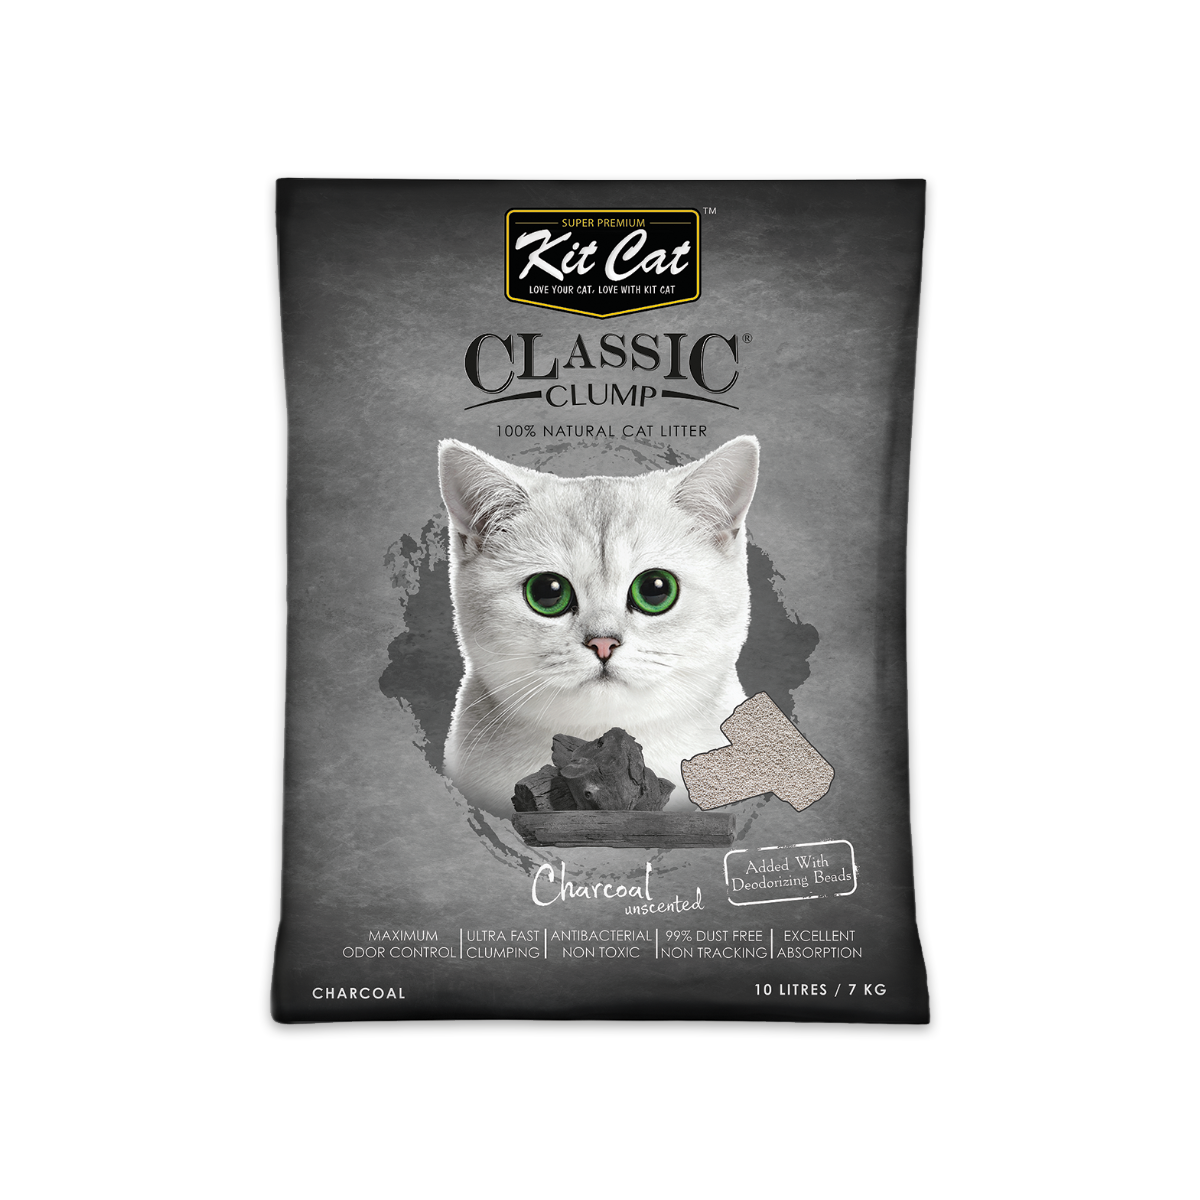 Kit Cat คิต แคท ทรายแมวเบนโทไนต์ สูตร Charcoal ขนาด 10 ลิตร